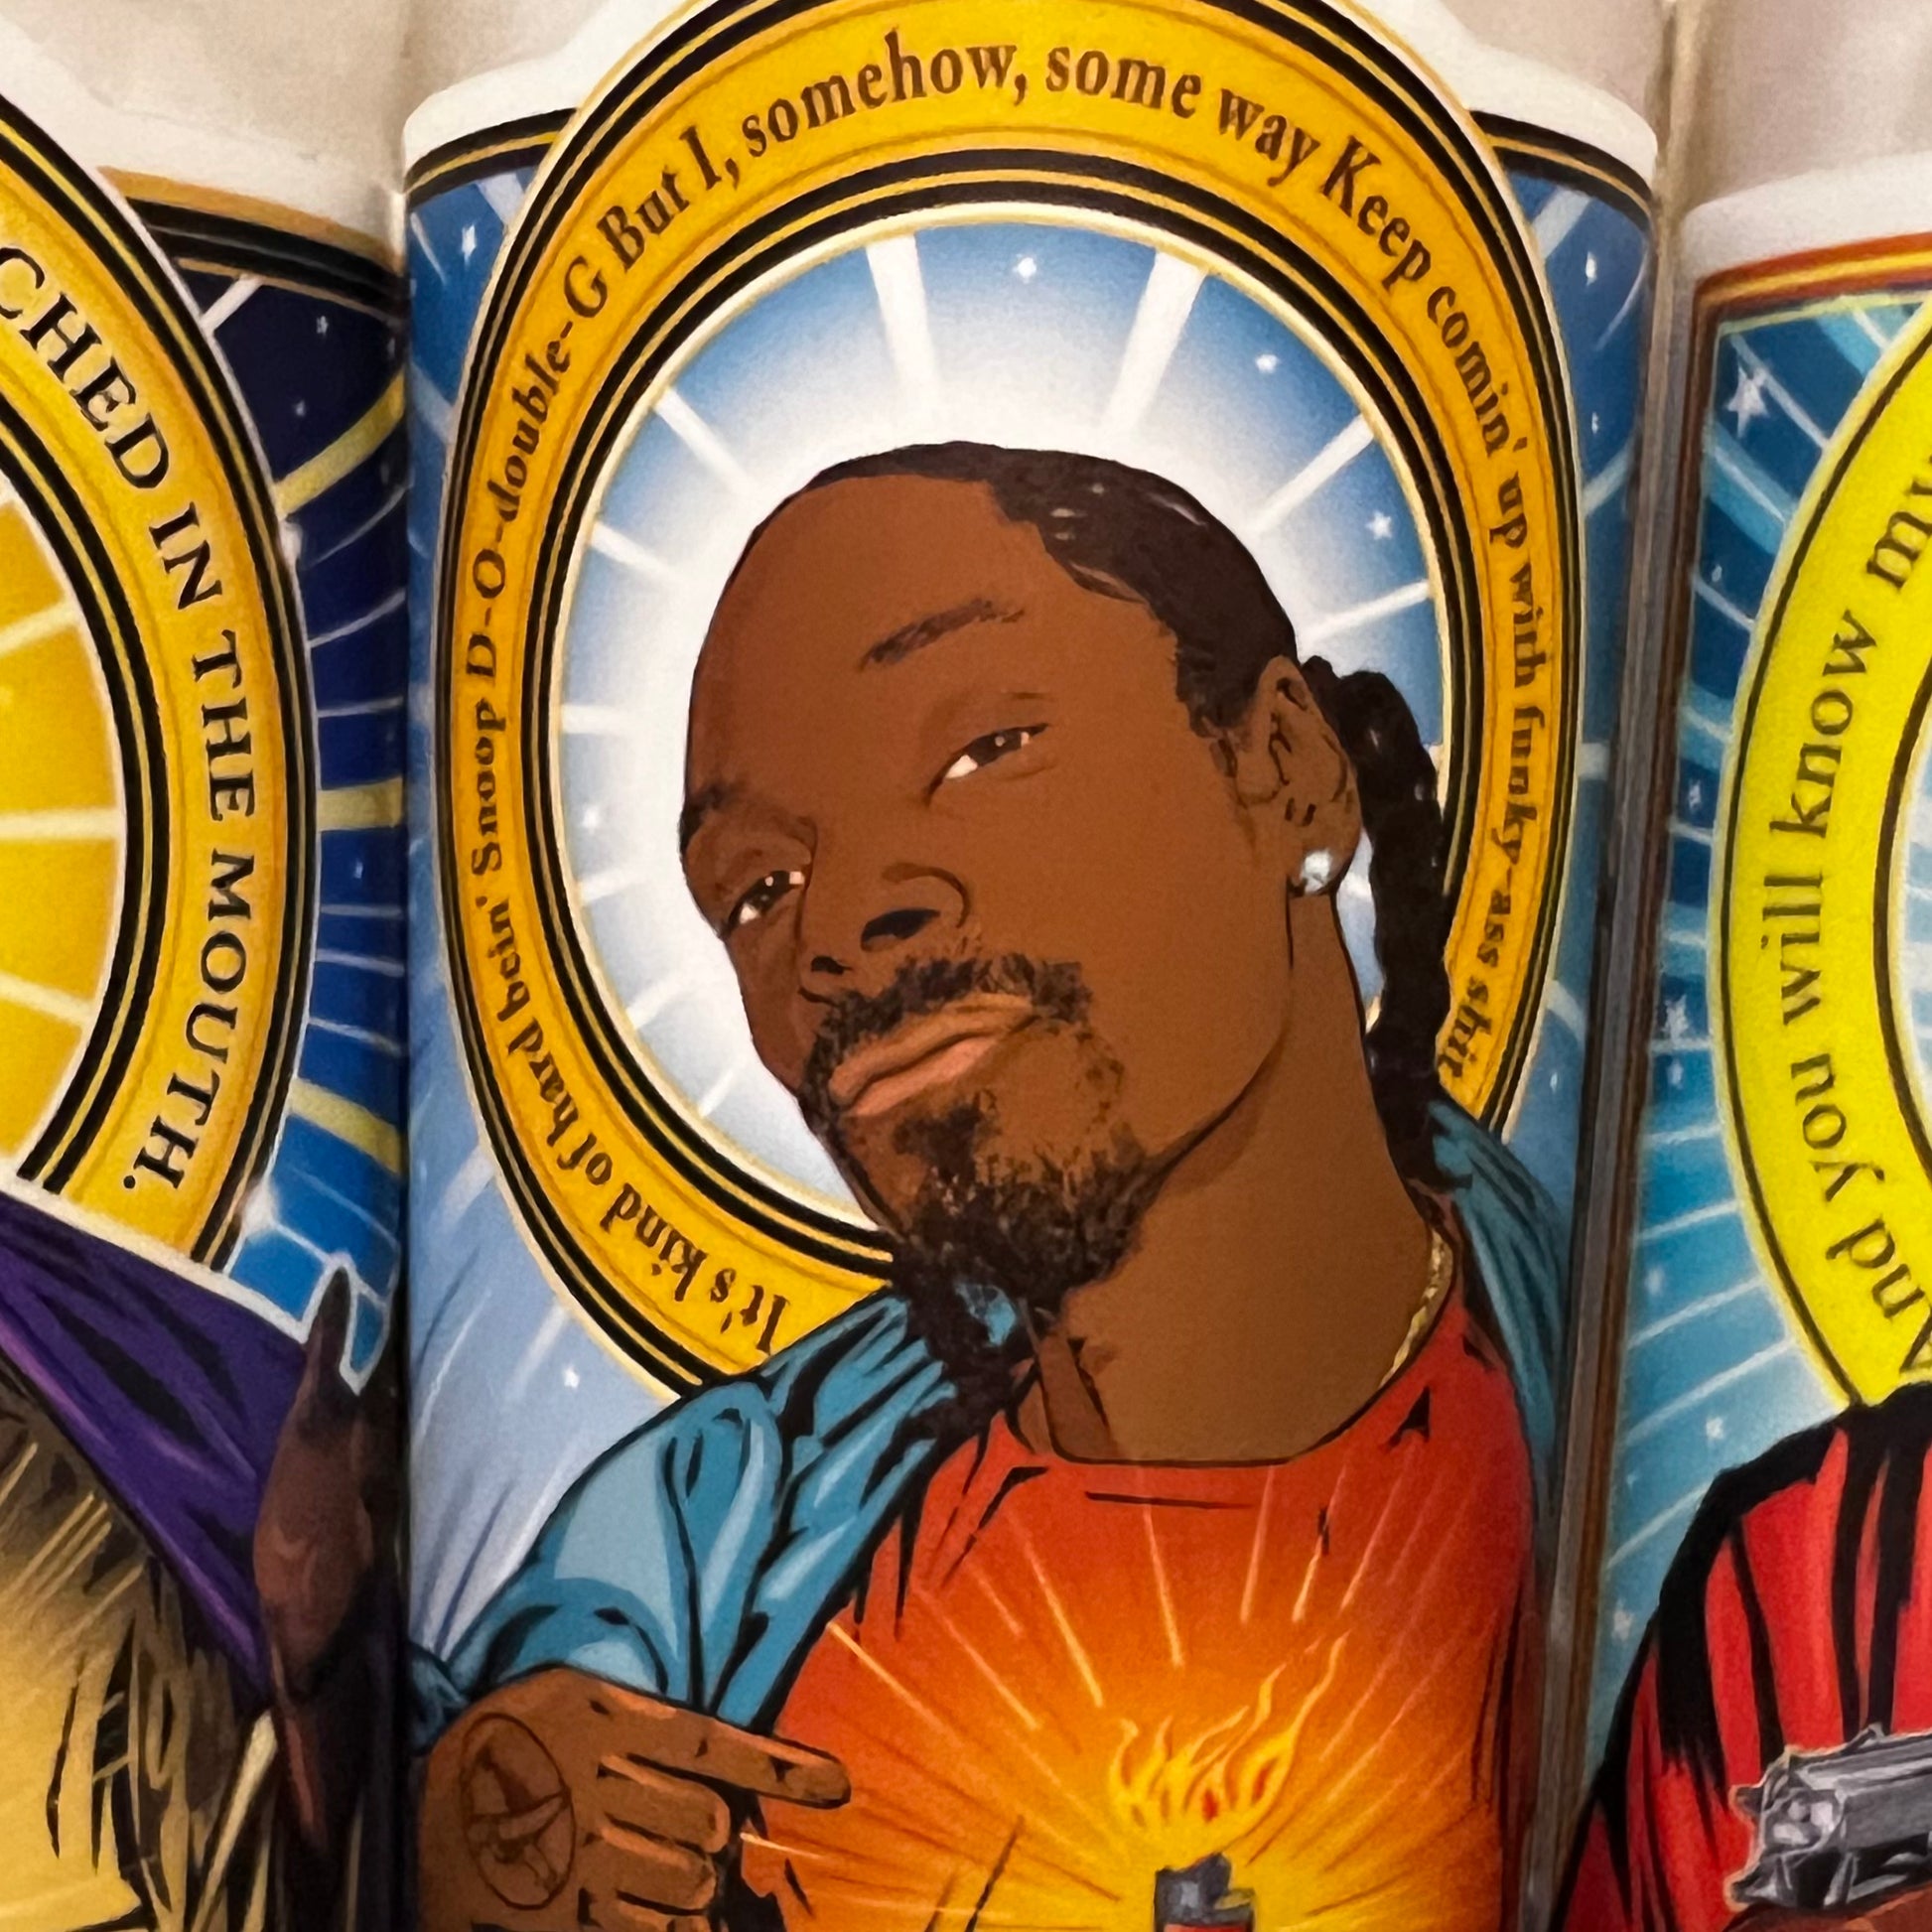 Saint Snoop-His Highness Candle Cleaverandblade.com